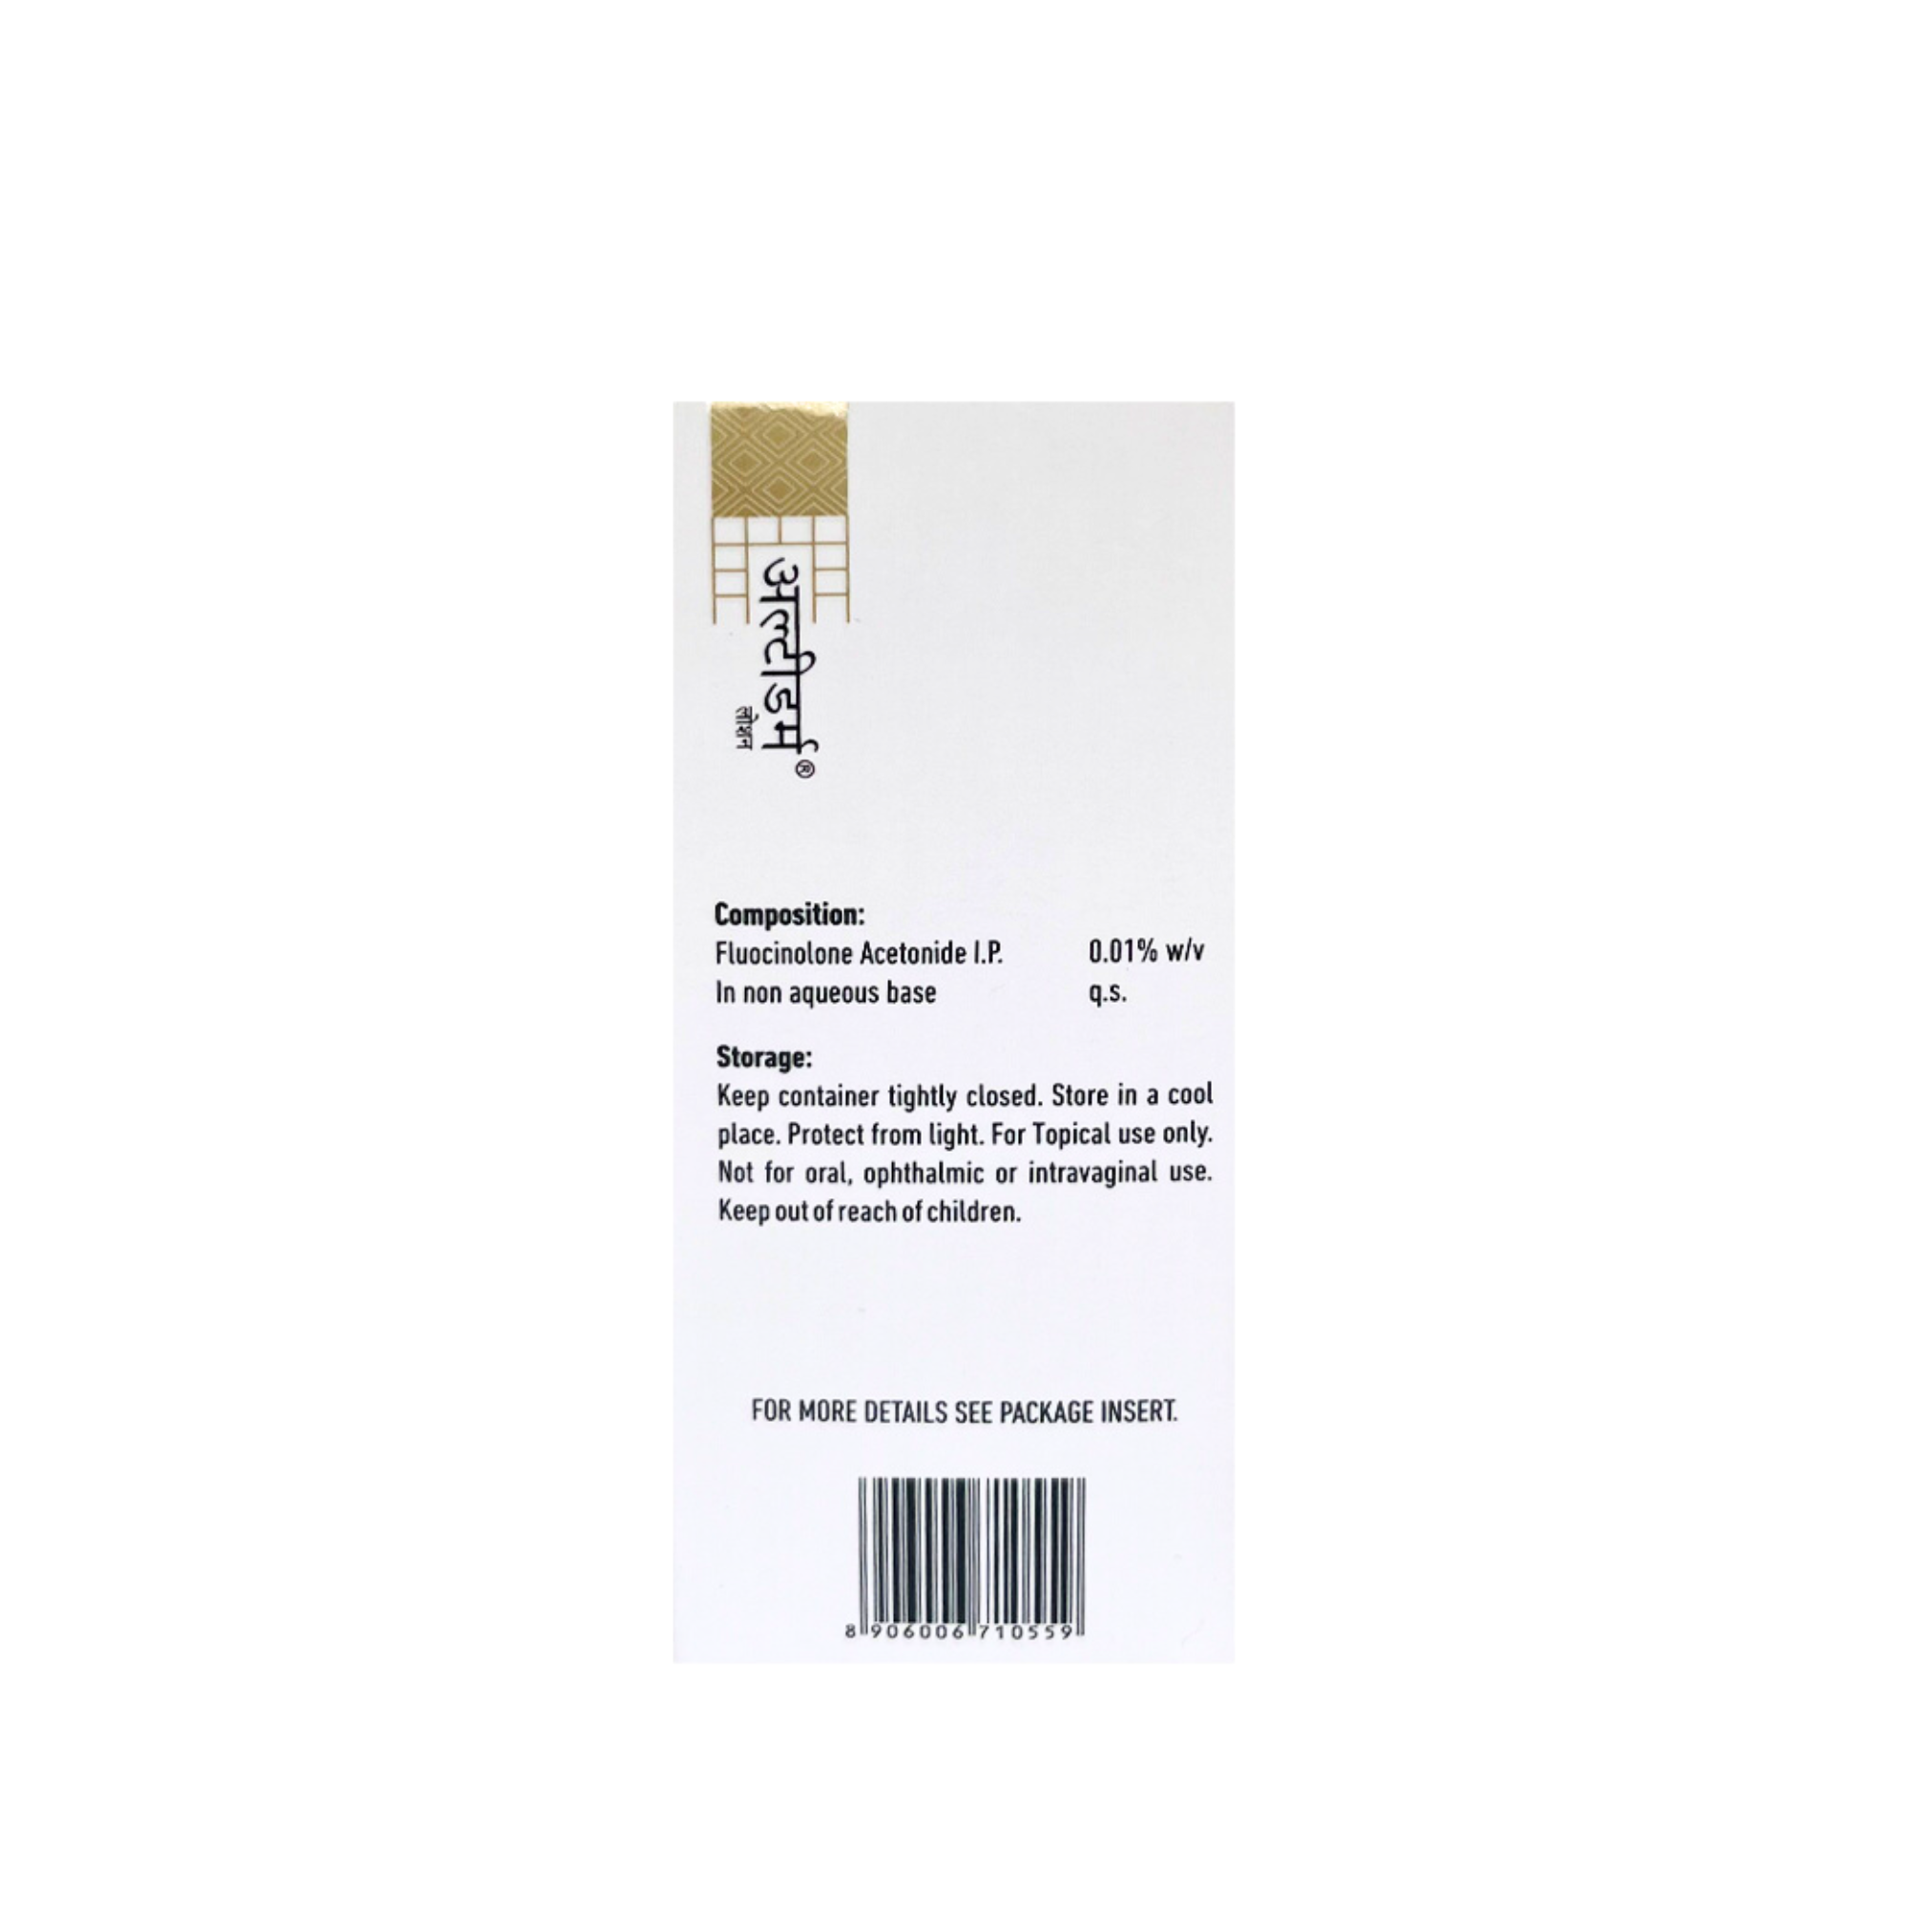 Ultiderm Lotion 0.01% 50 ml (ONLY BY PRESCRIPTION)